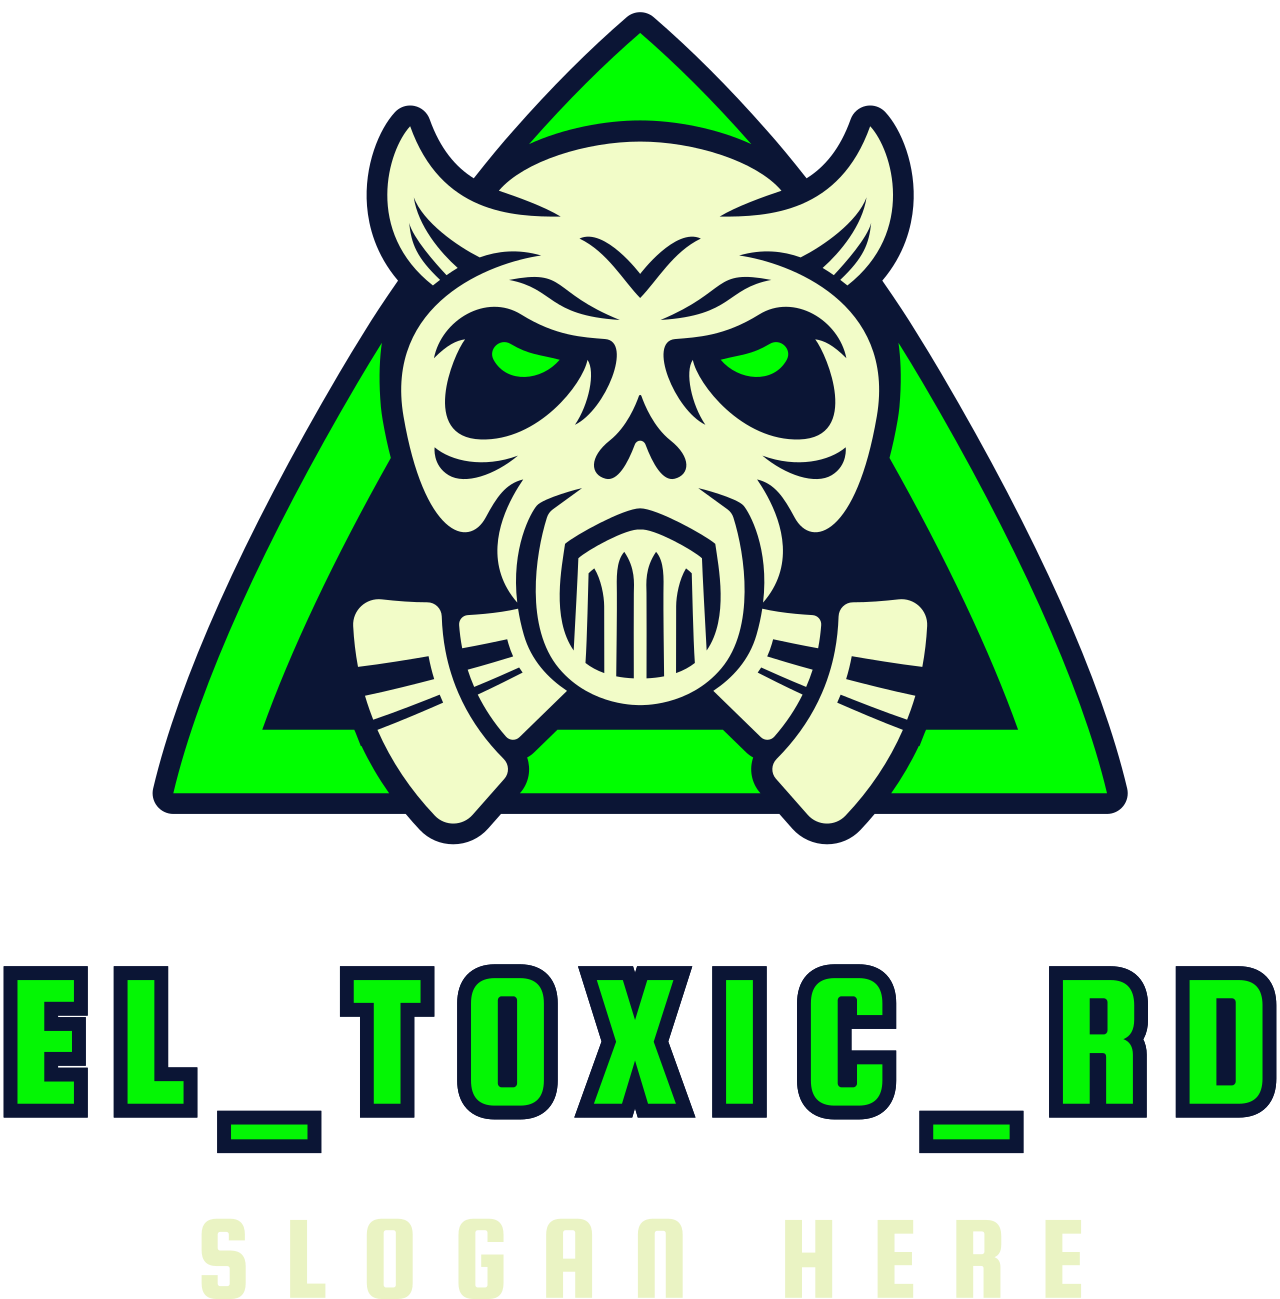 EL_toxic_RD's logo